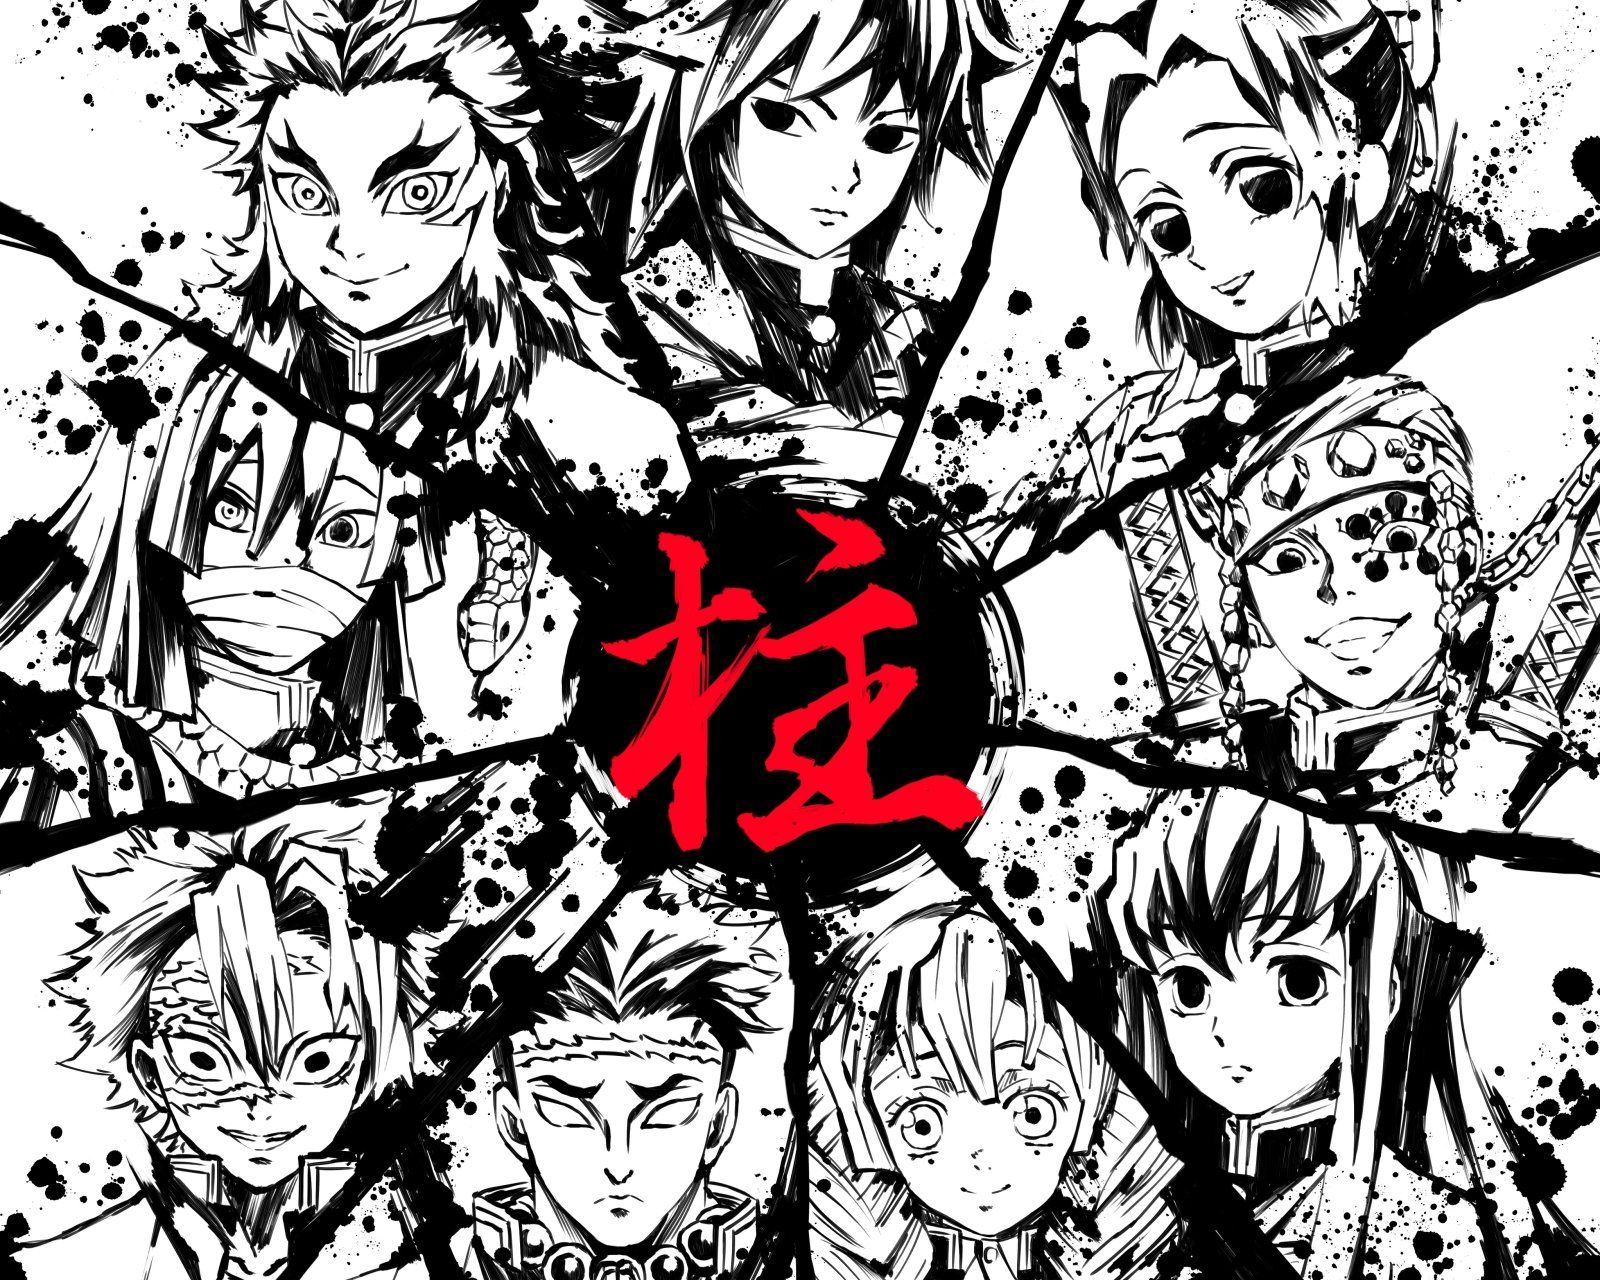 Demon Slayer Manga Panels Background Image and Wallpaper